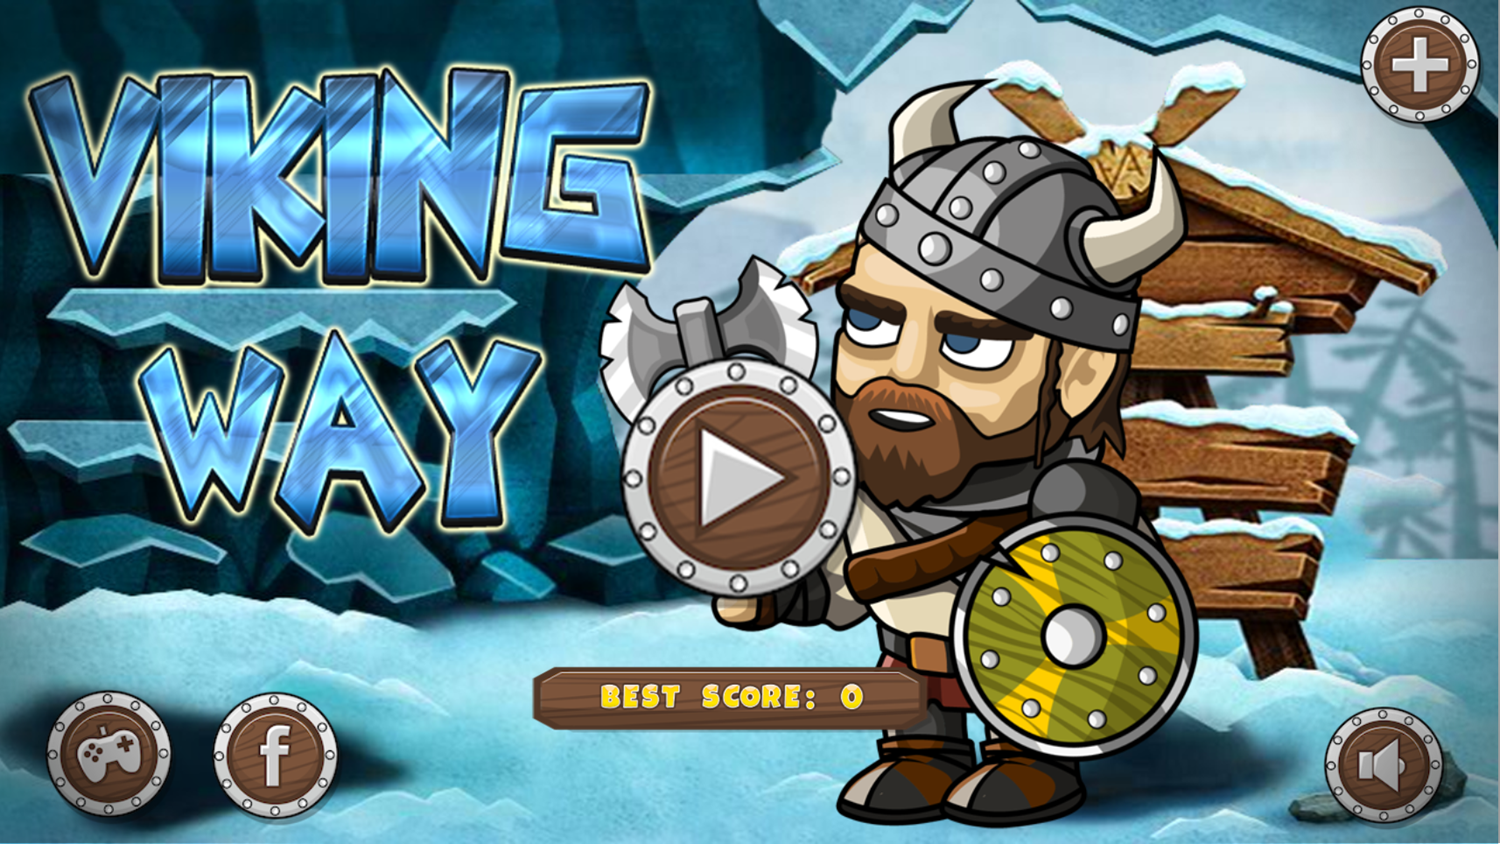 Viking Way Game Welcome Screen Screenshot.